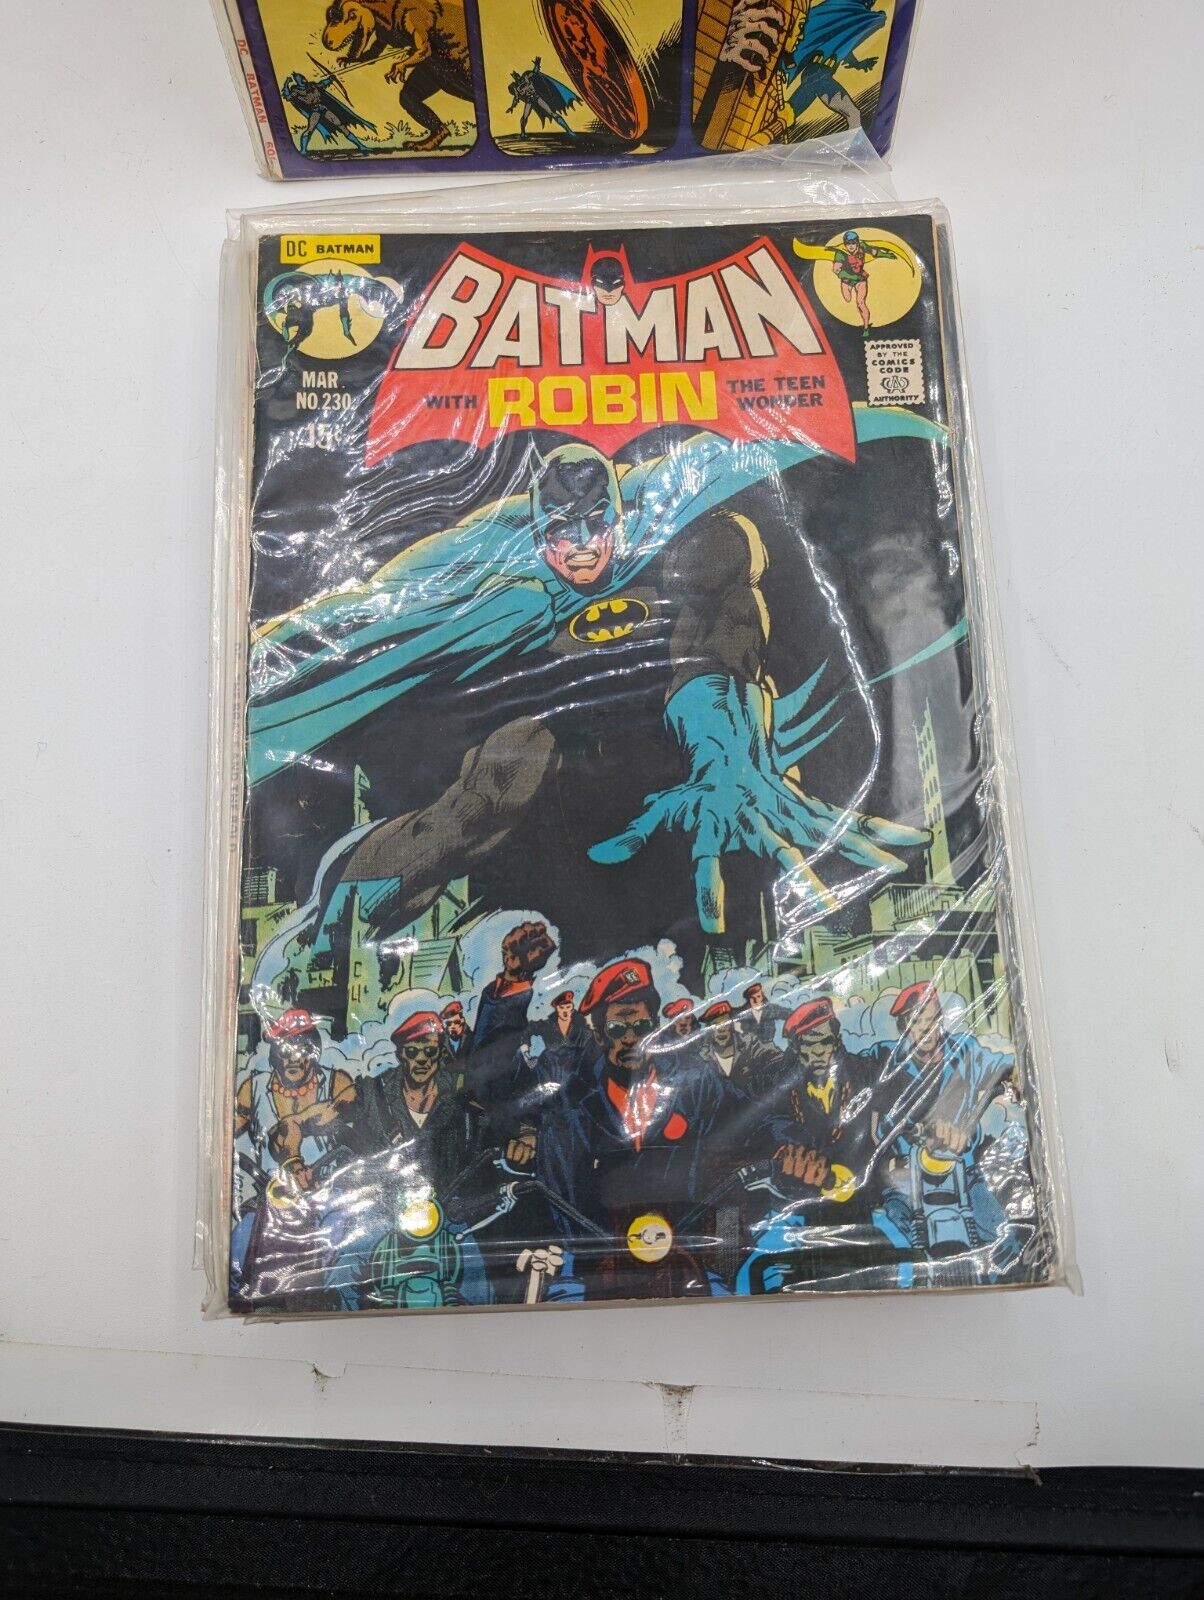 Batman with Robin The Teen Wonder No 230 MAR 1971 DC COMICS Neal Adams Cover